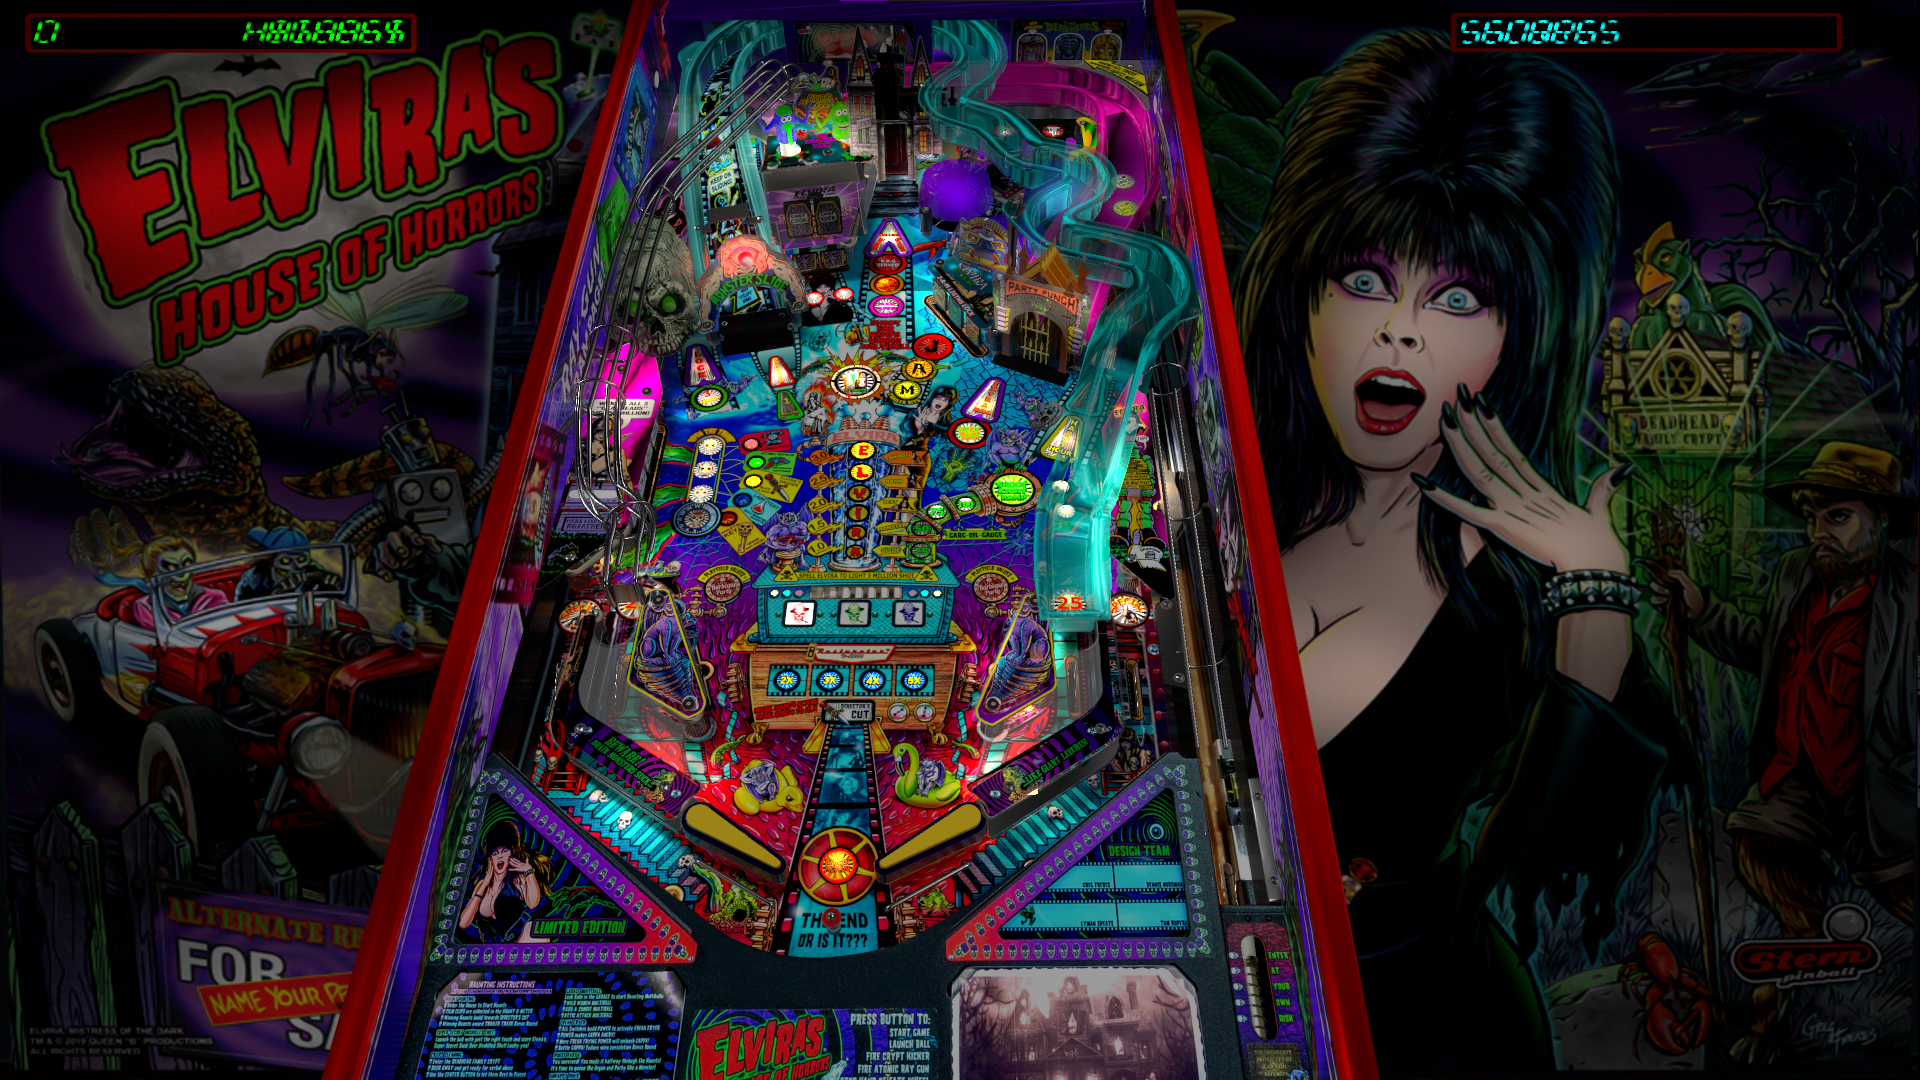 Elvira's "Party House of Horror"